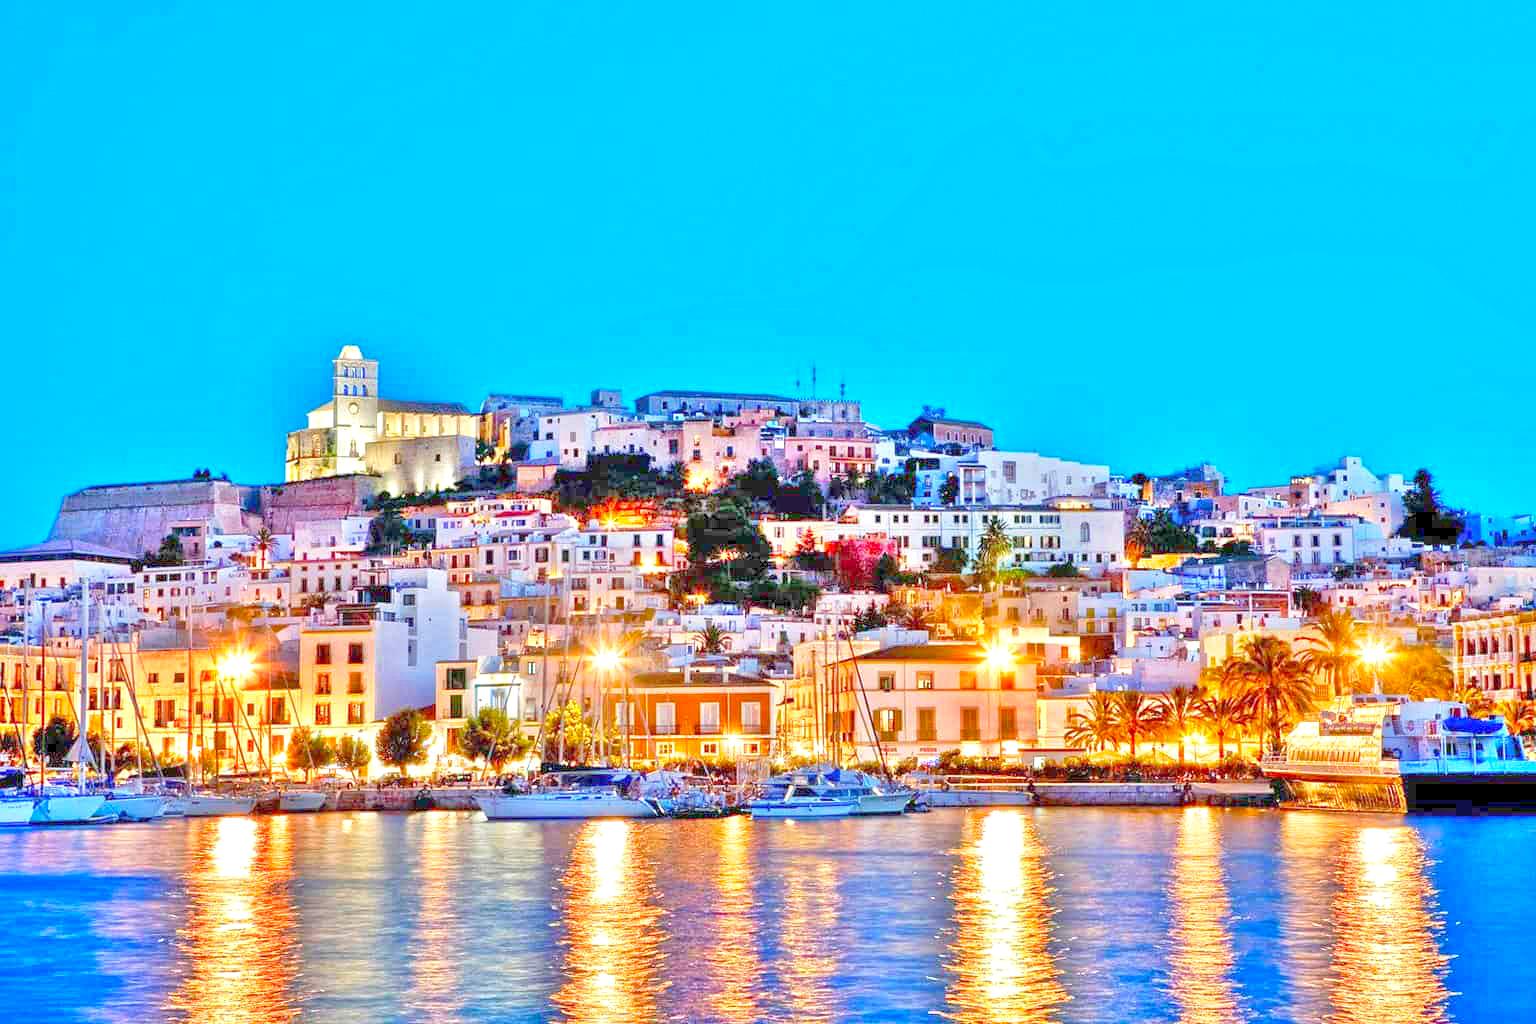 Southern Ibiza as a holiday destination